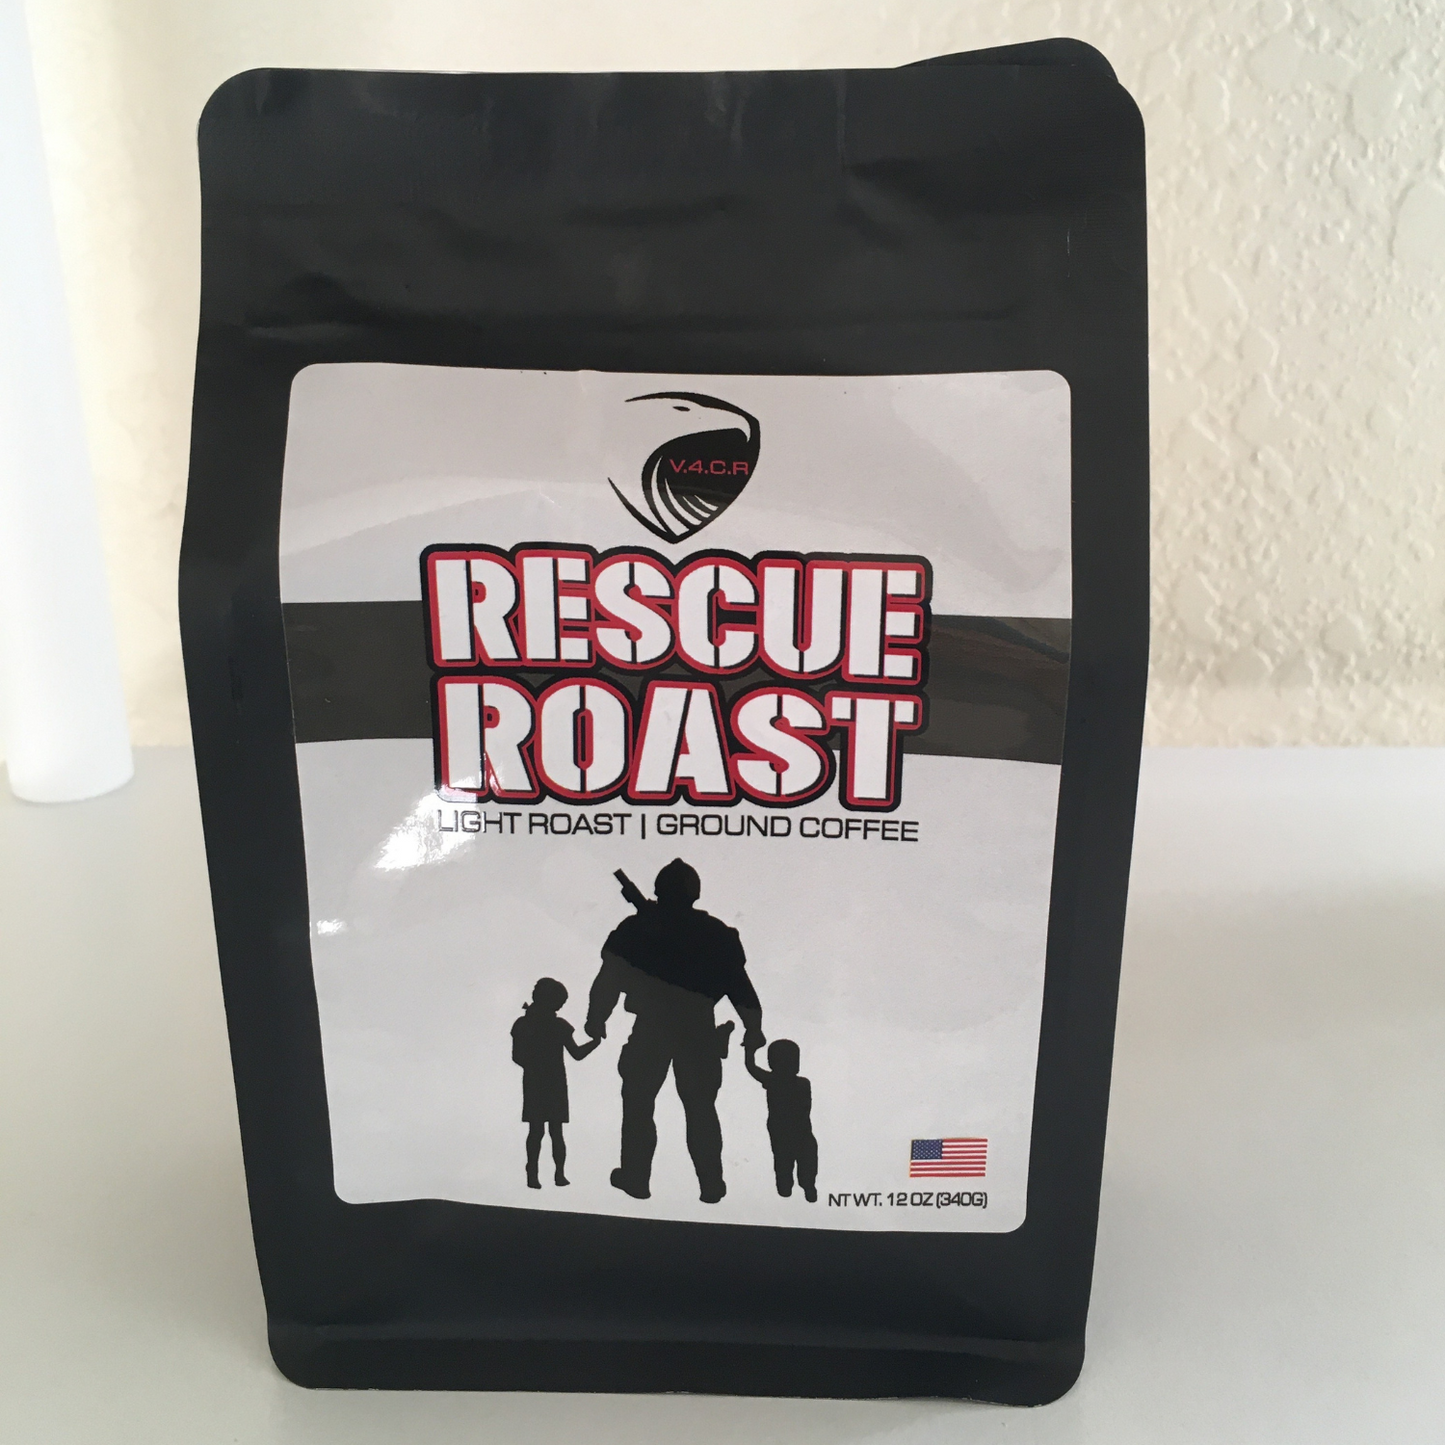 V4CR Rescue Roast Coffee